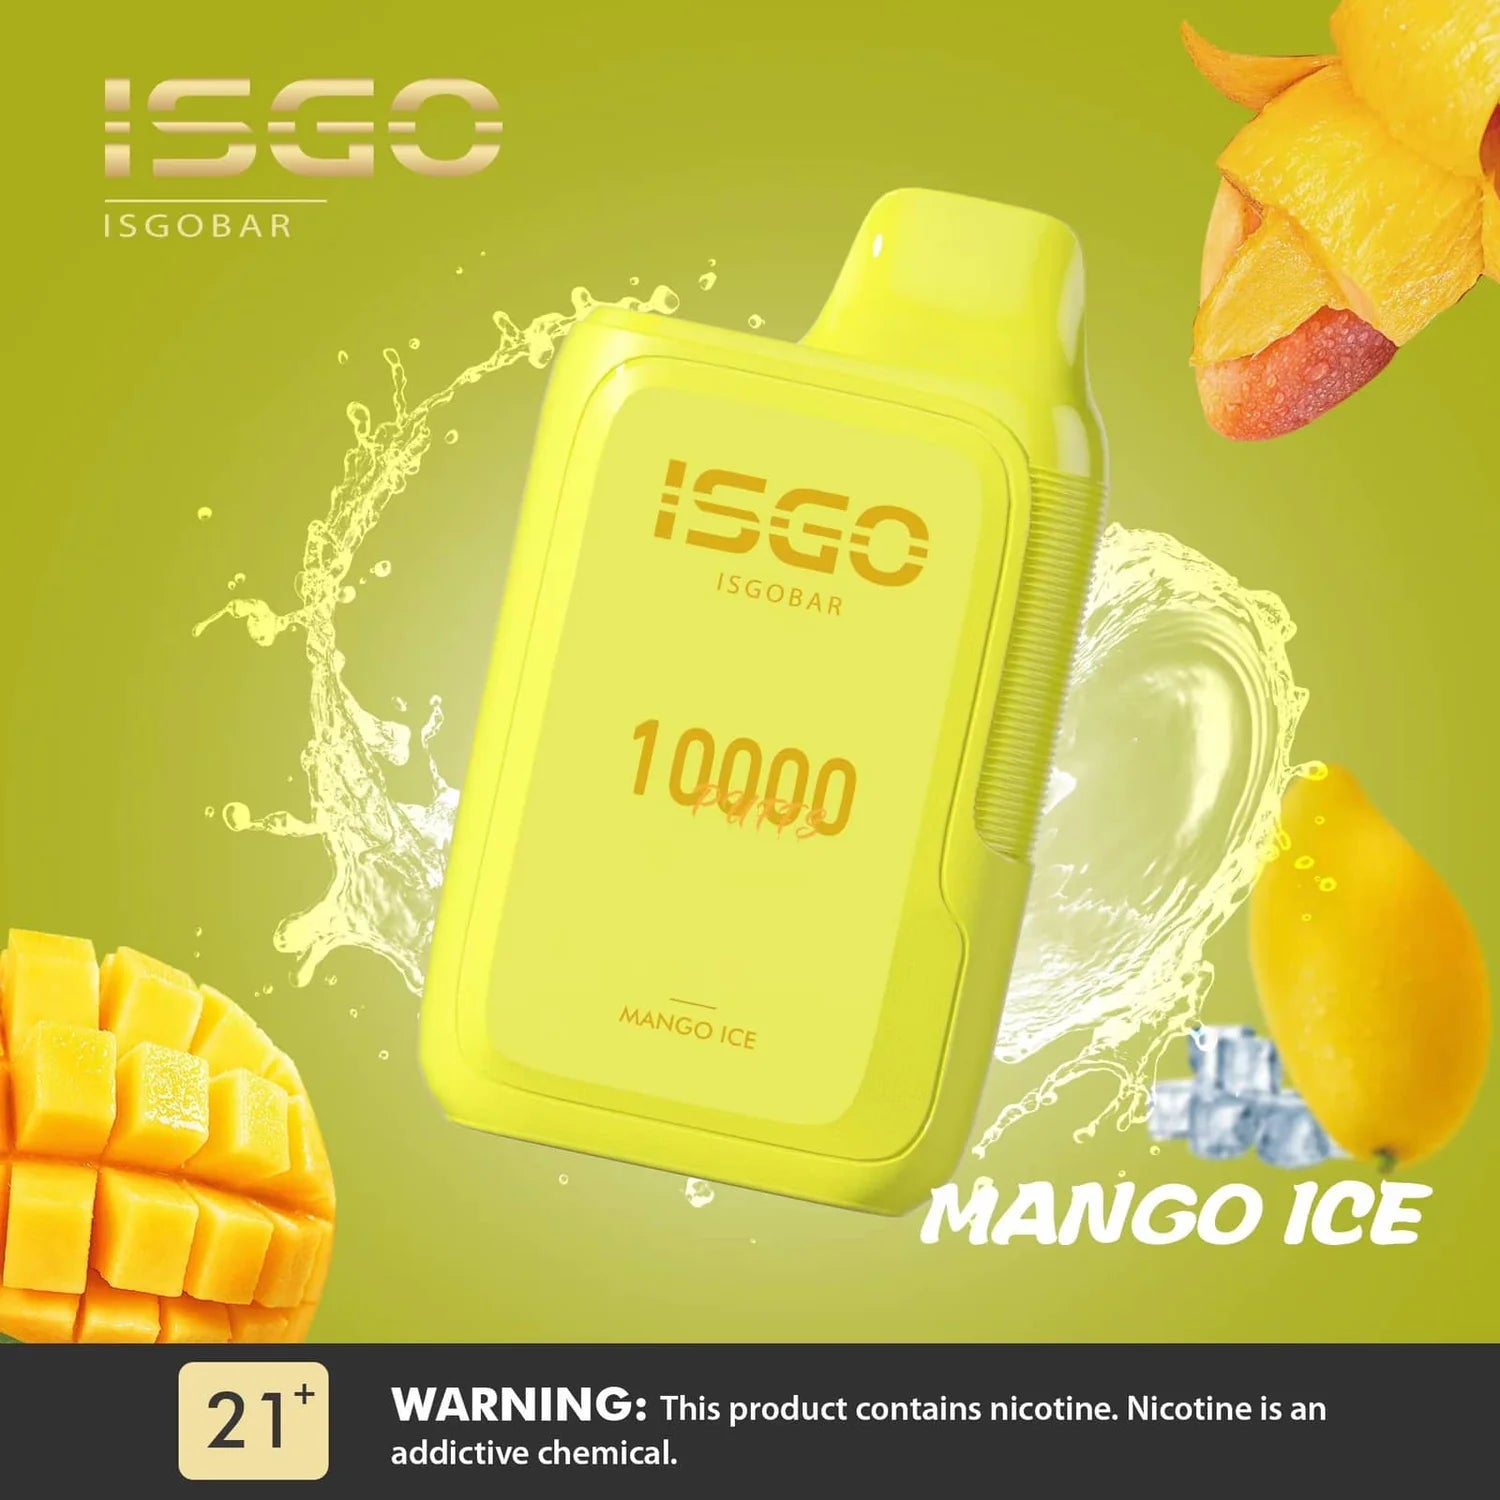 ISGO BAR 10000 - MANGO ICE